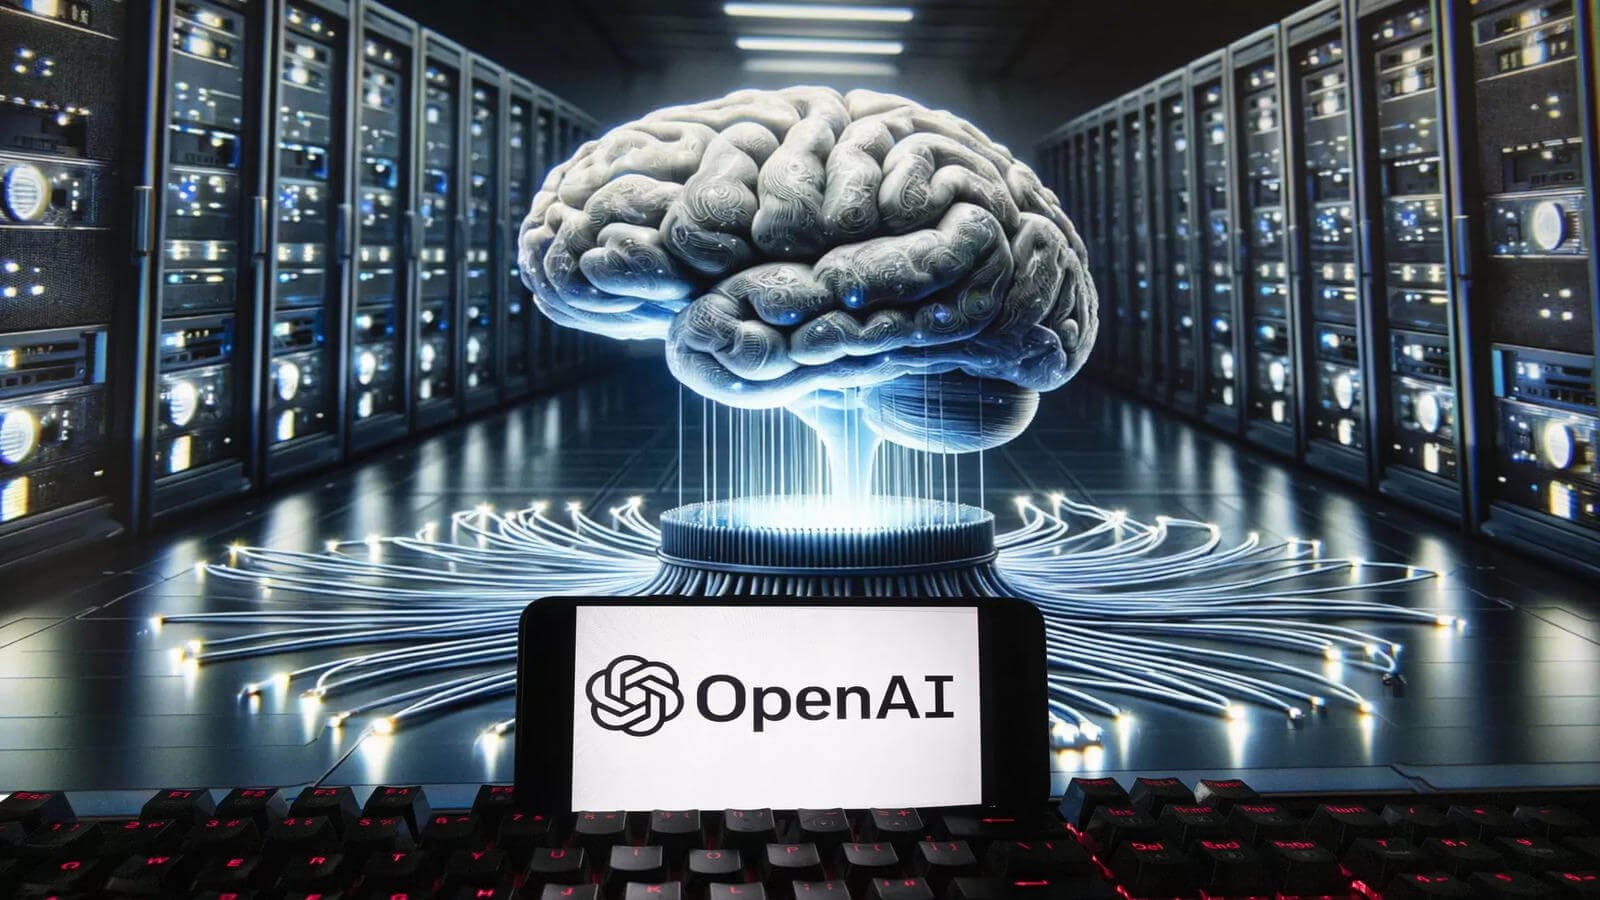 Open AI สตาร์ทอัพยักษ์ใหญ่ที่สุดในโลก หลังปิดดีล 8 หมื่นล้านดอลลาร์  